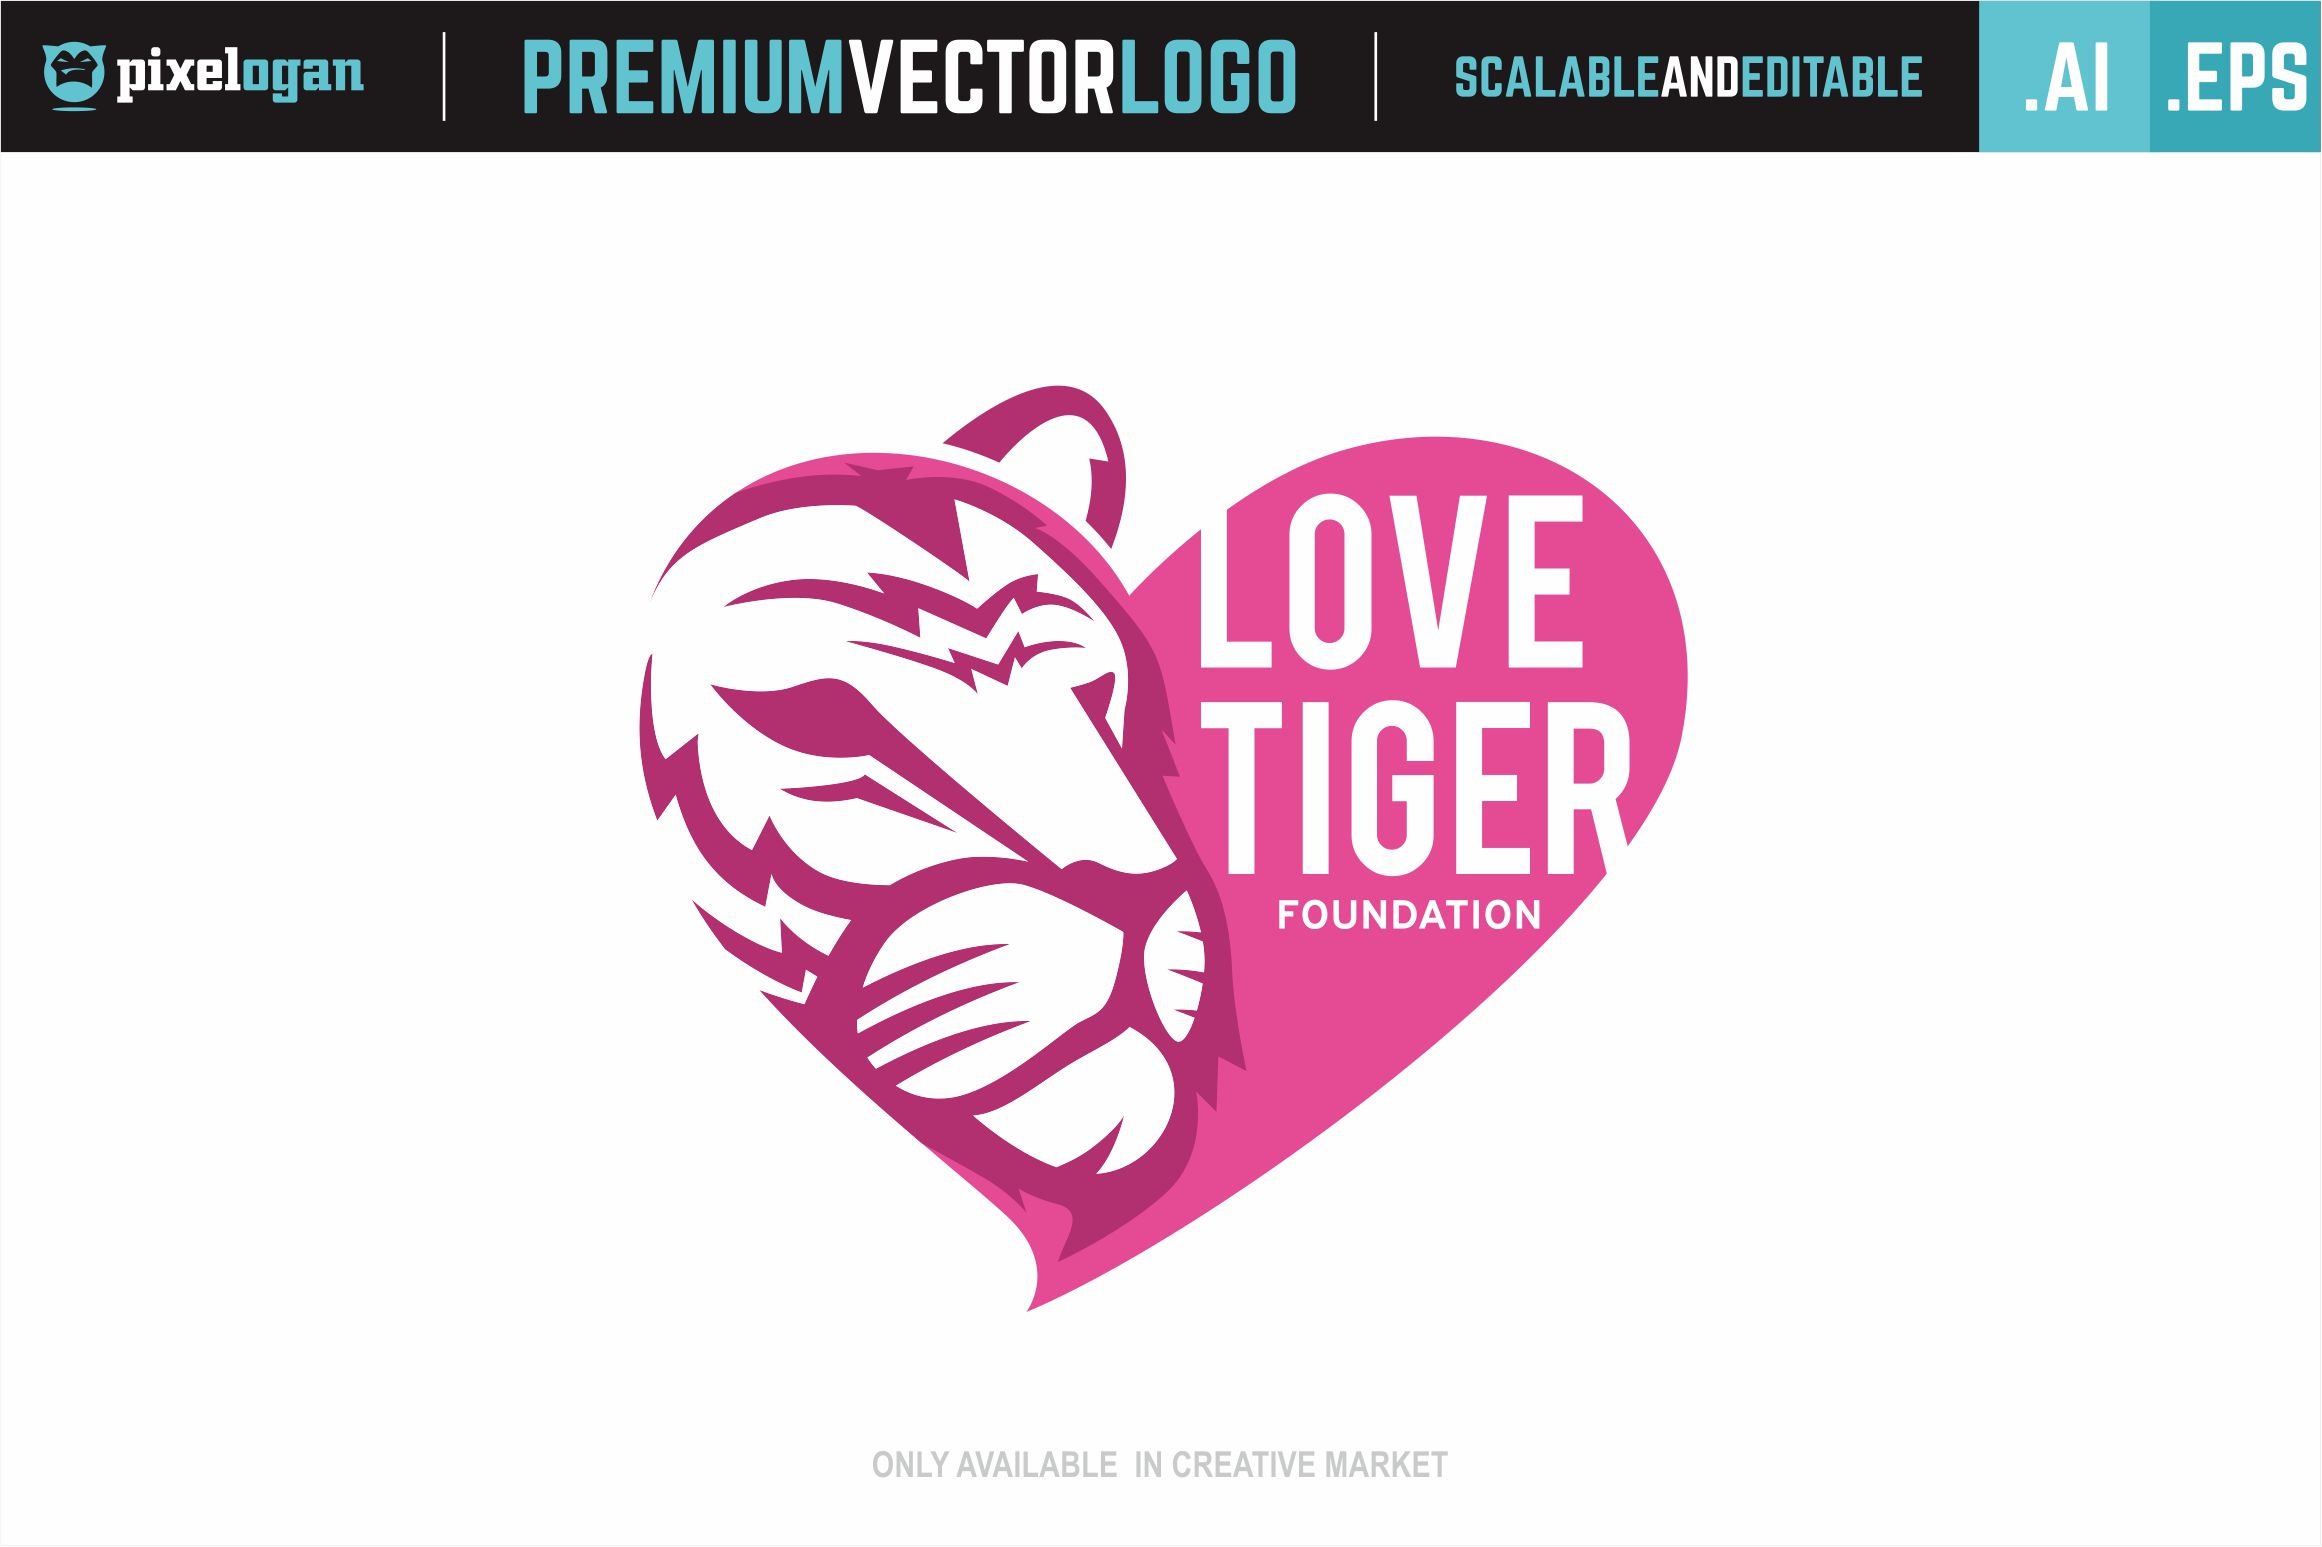 Love Tiger Logo cover image.